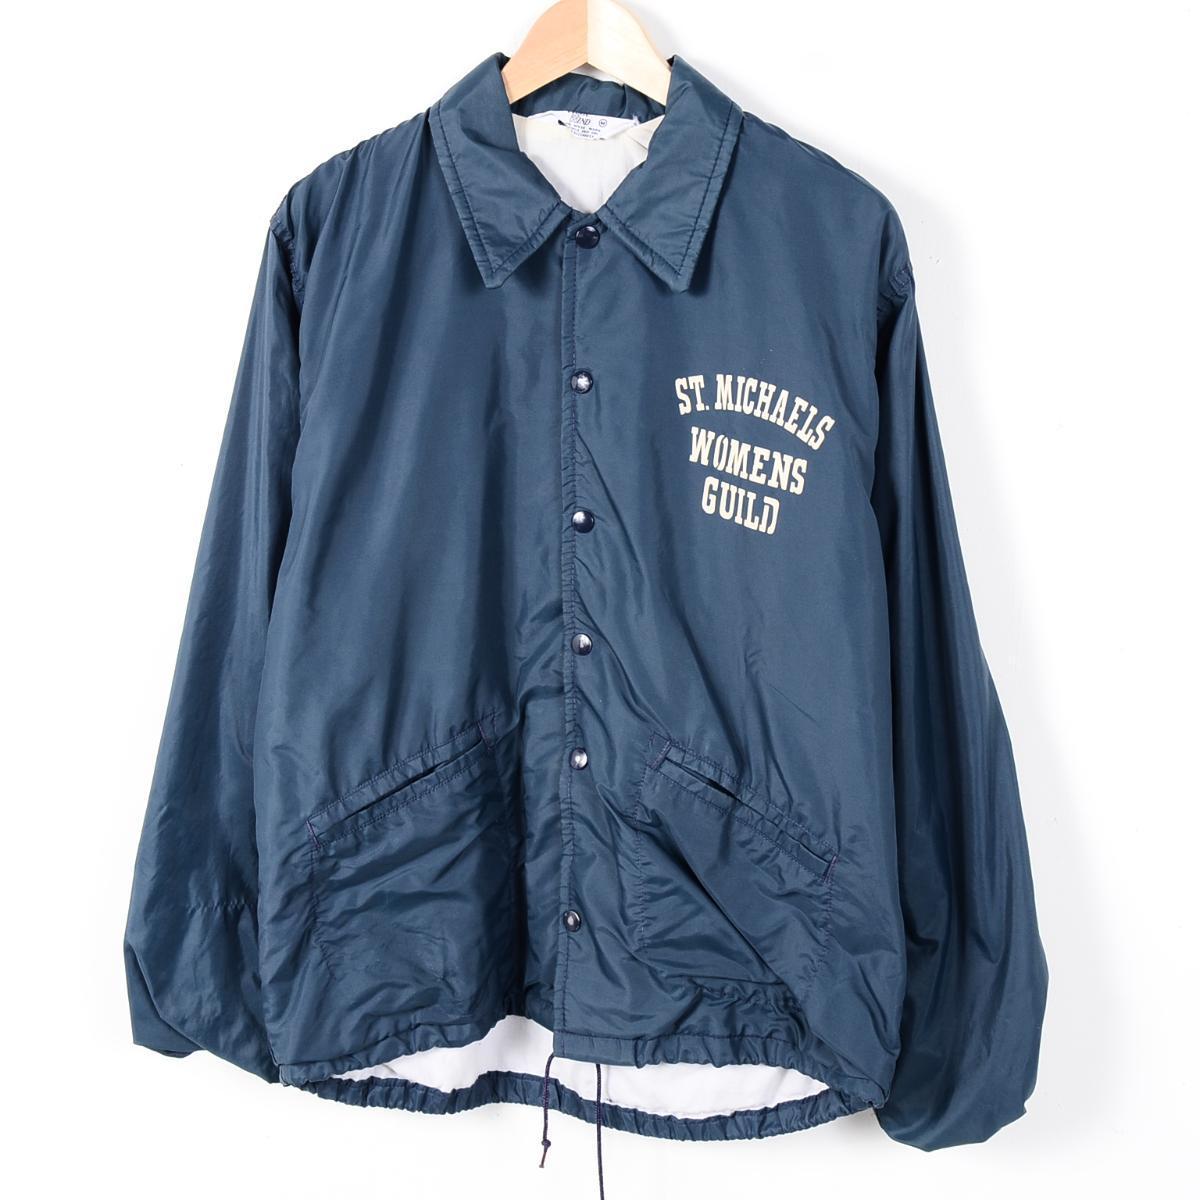 VINTAGE CLOTHING JAM TRADING | Rakuten Global Market: Coach jacket mens ...